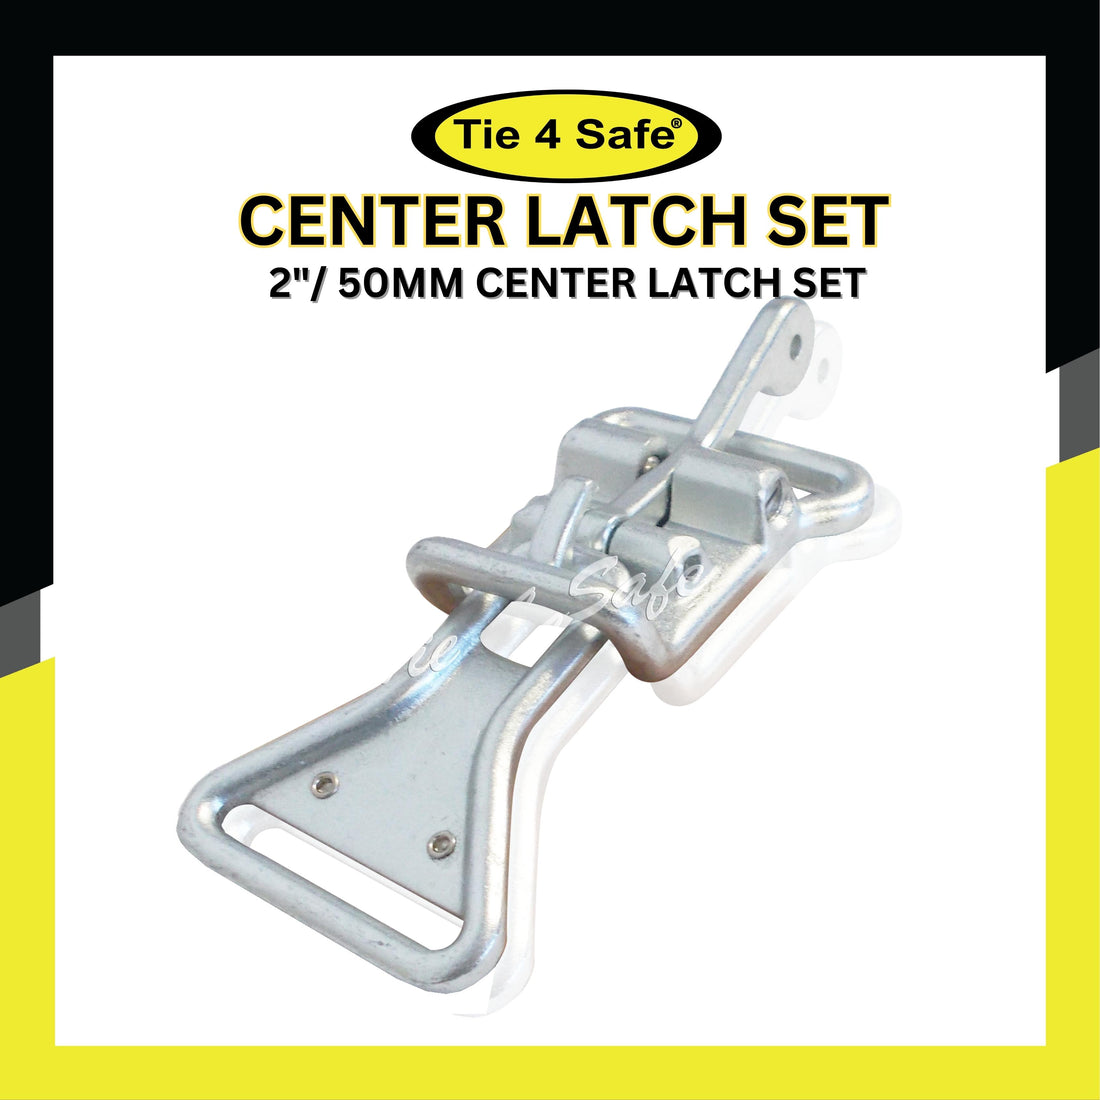 2"/ 50mm Center Latch Set